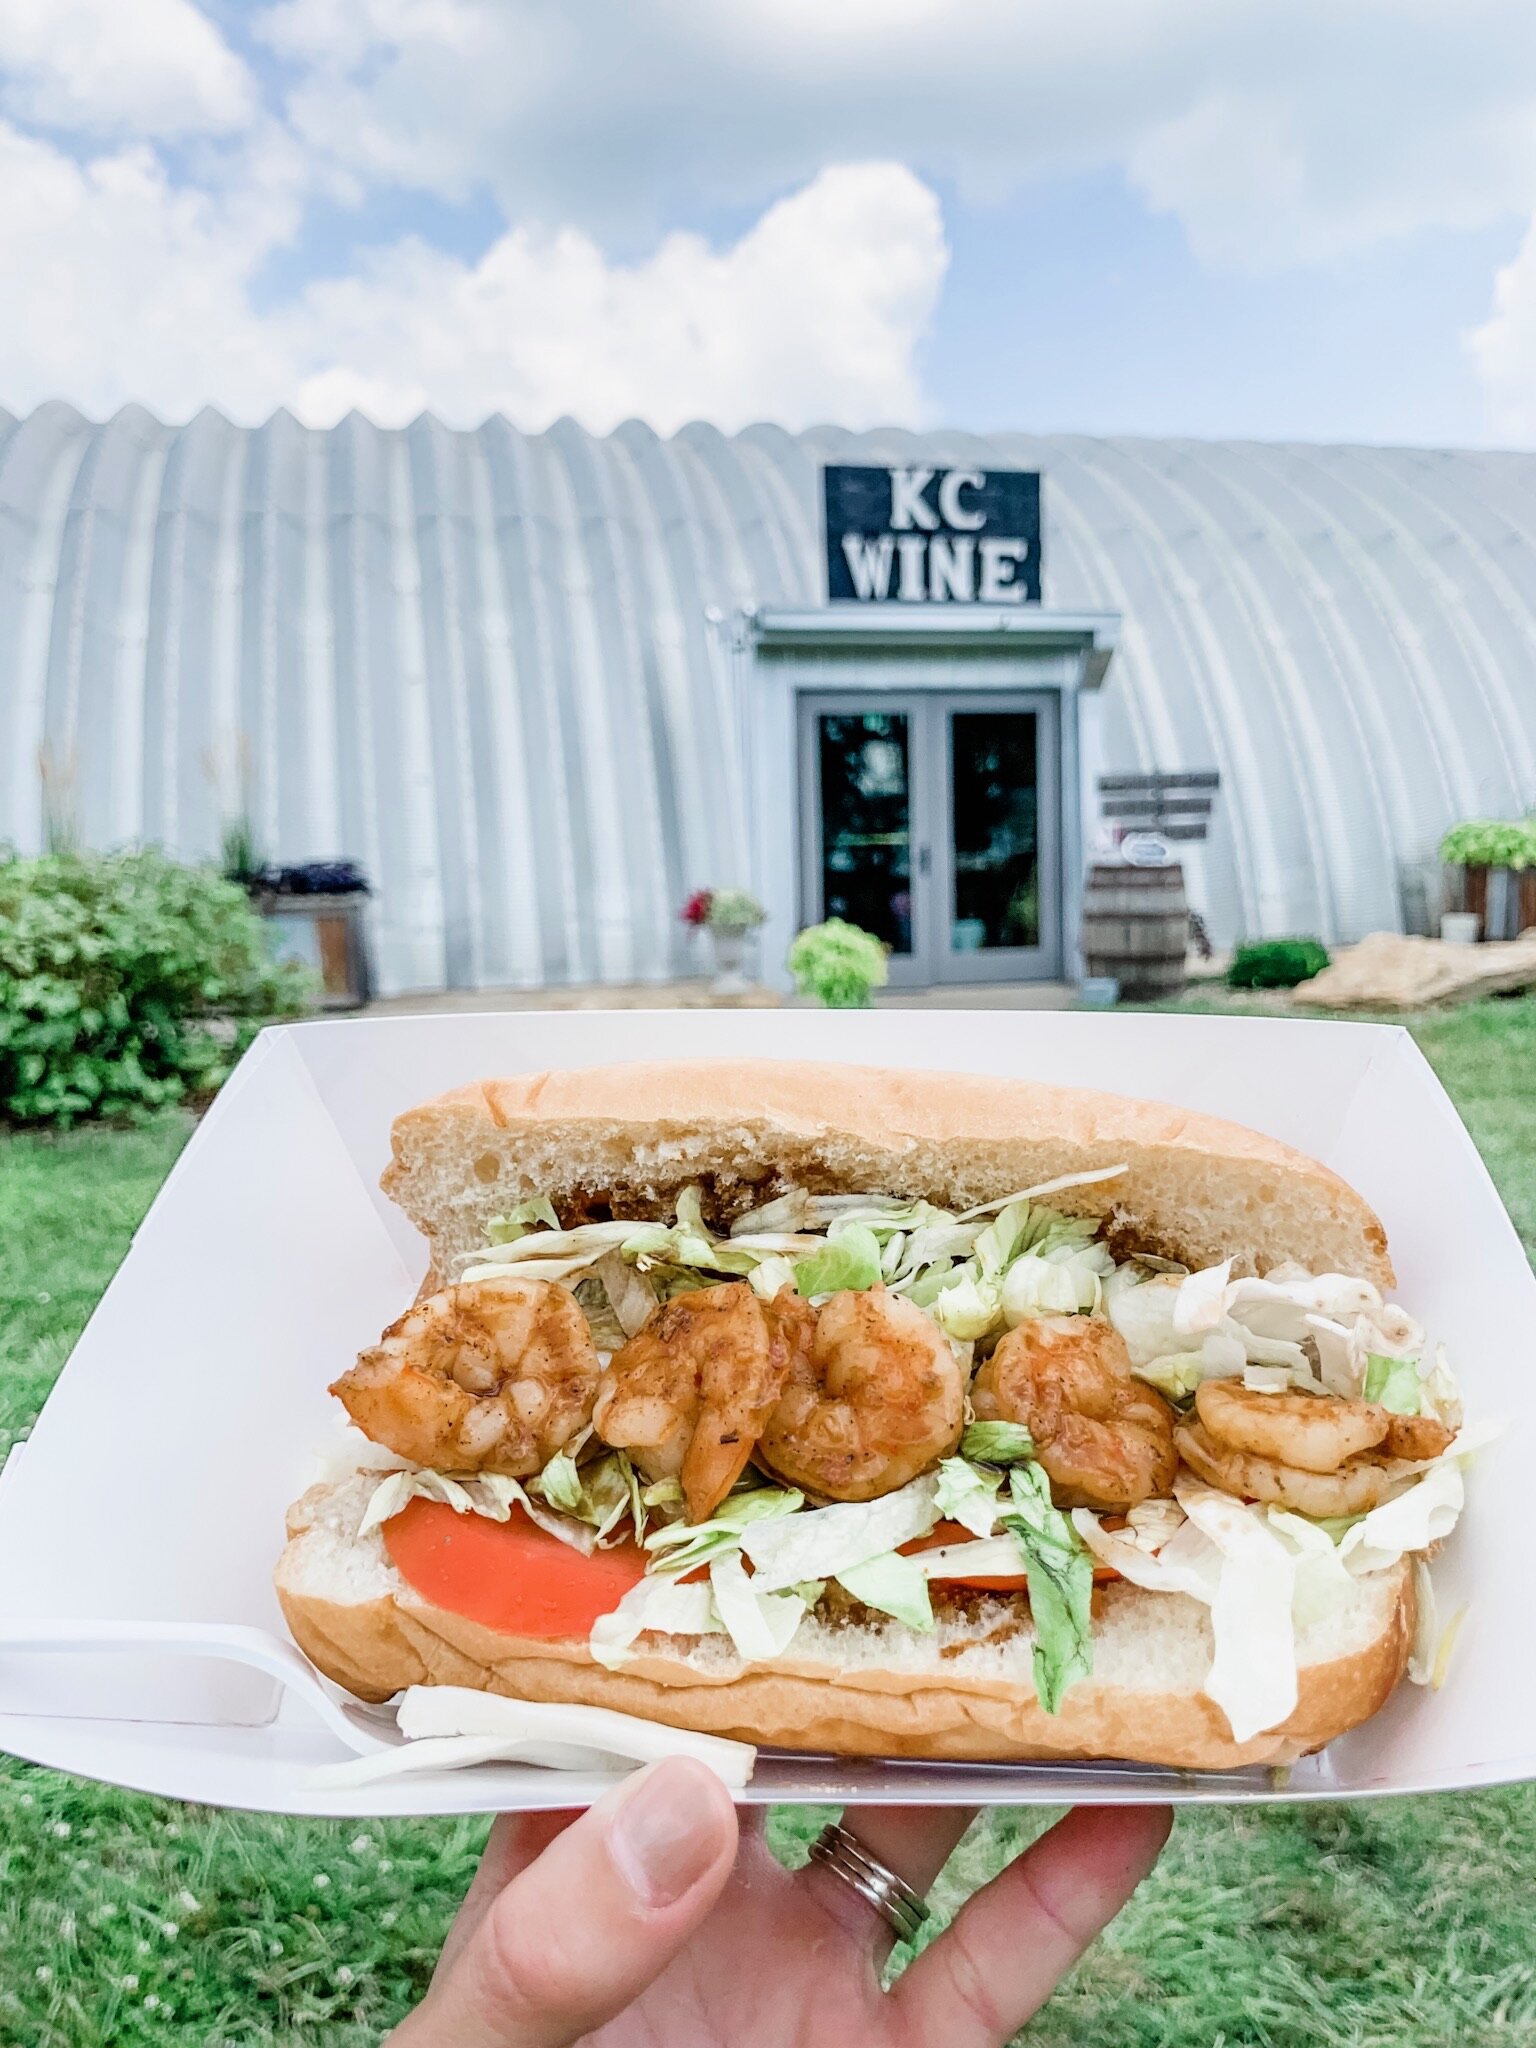 A shrimp po boy sandwich in front of the KC Wines front door